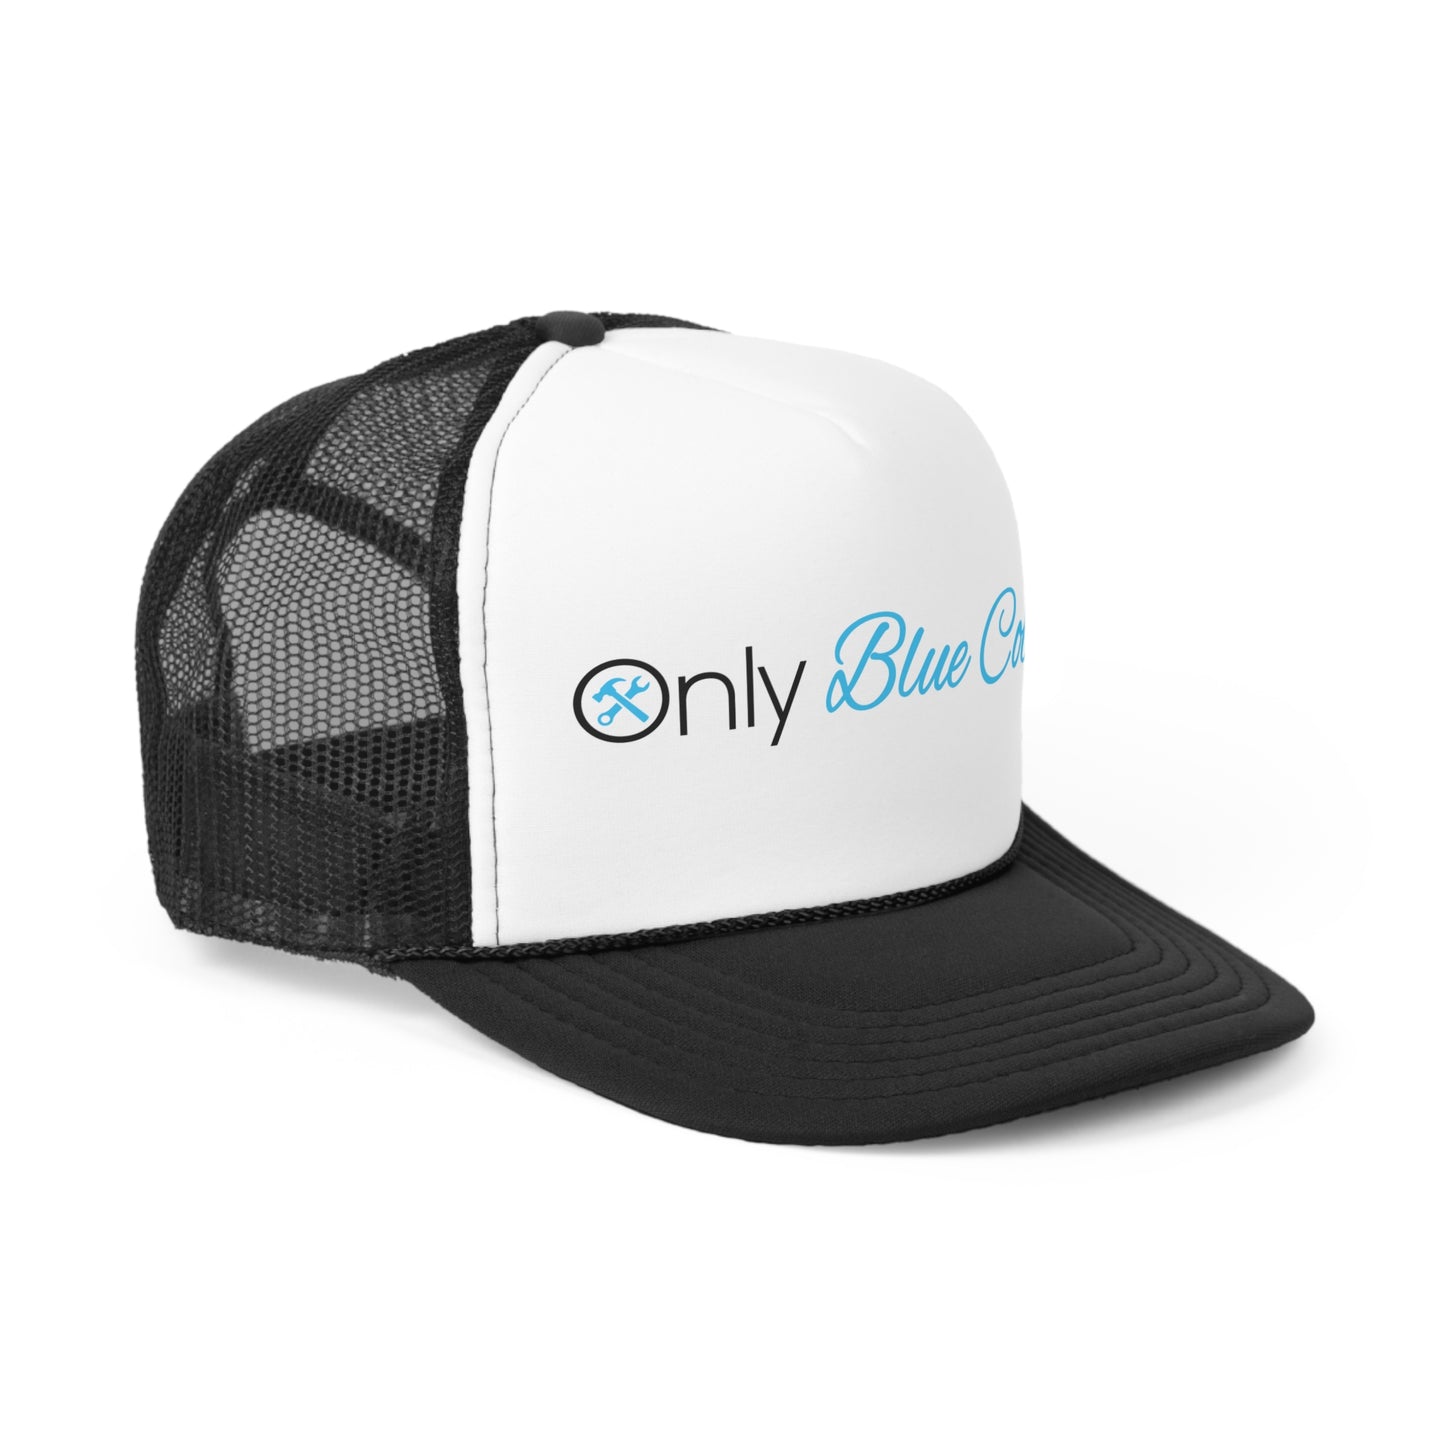 Only Blue Collar - Trucker Caps